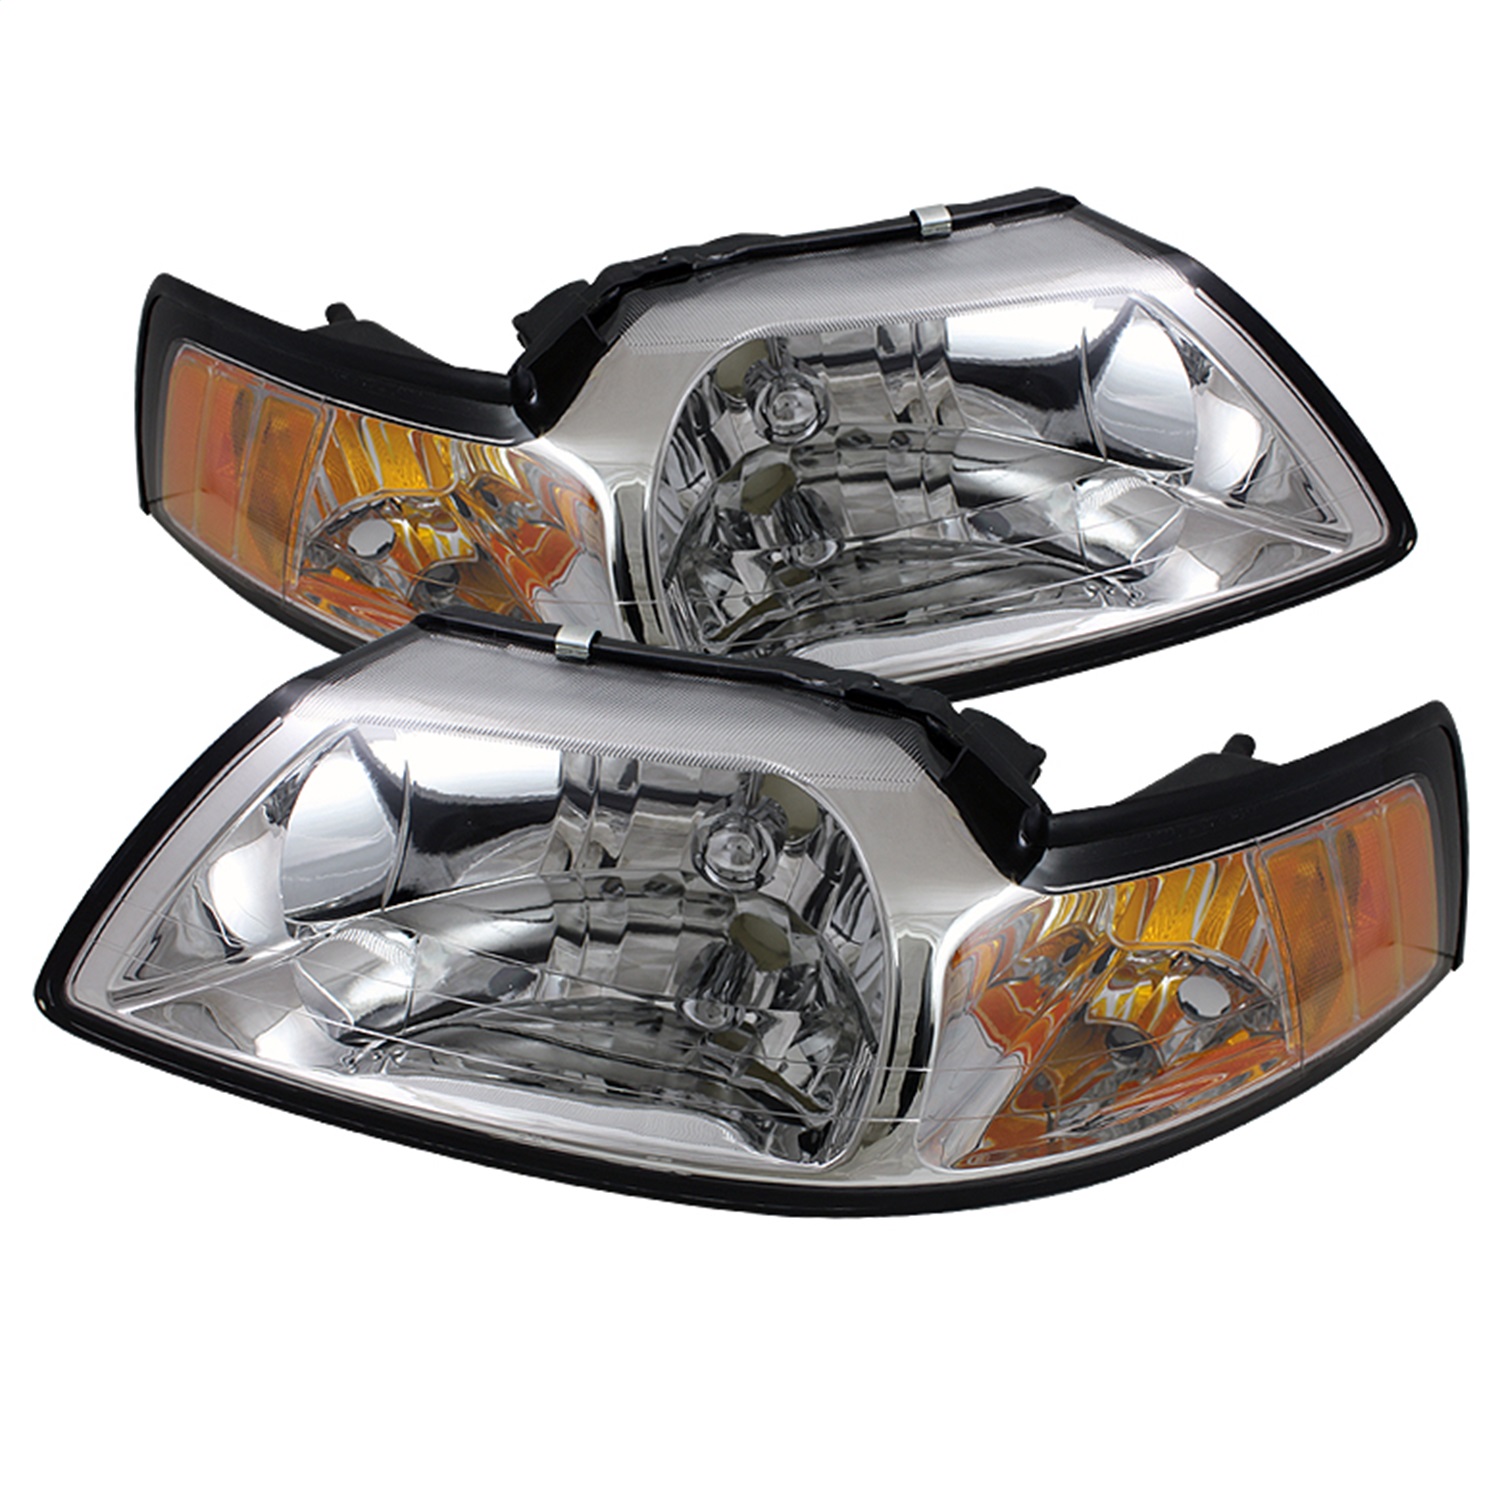 Spyder Auto 5064493 Crystal Headlights Fits 99-04 Mustang